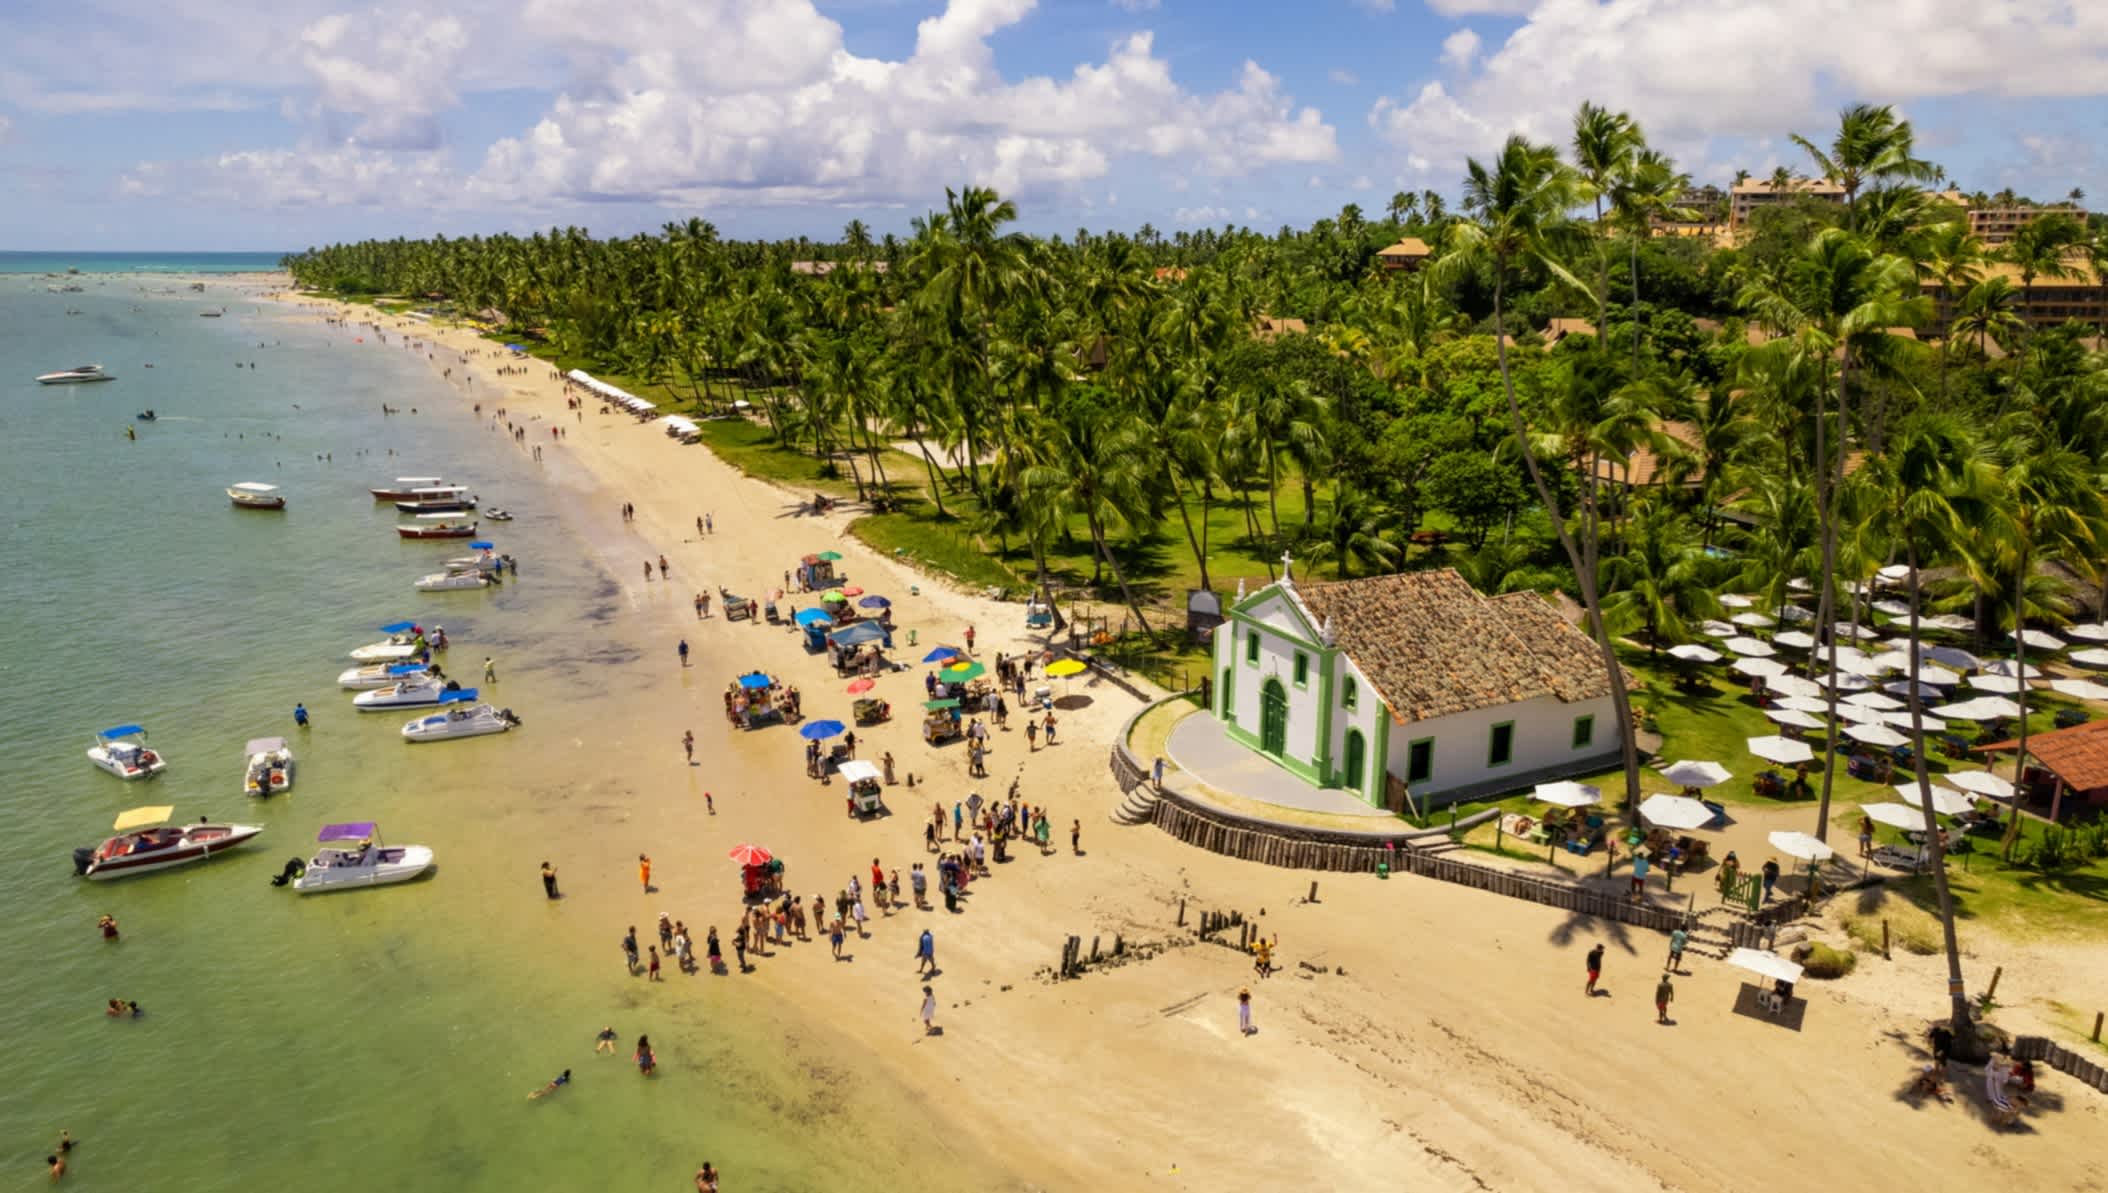 Kleine Kirche von Praia dos Carneiros in Tamandaré, Pernambuco, Brasilien

